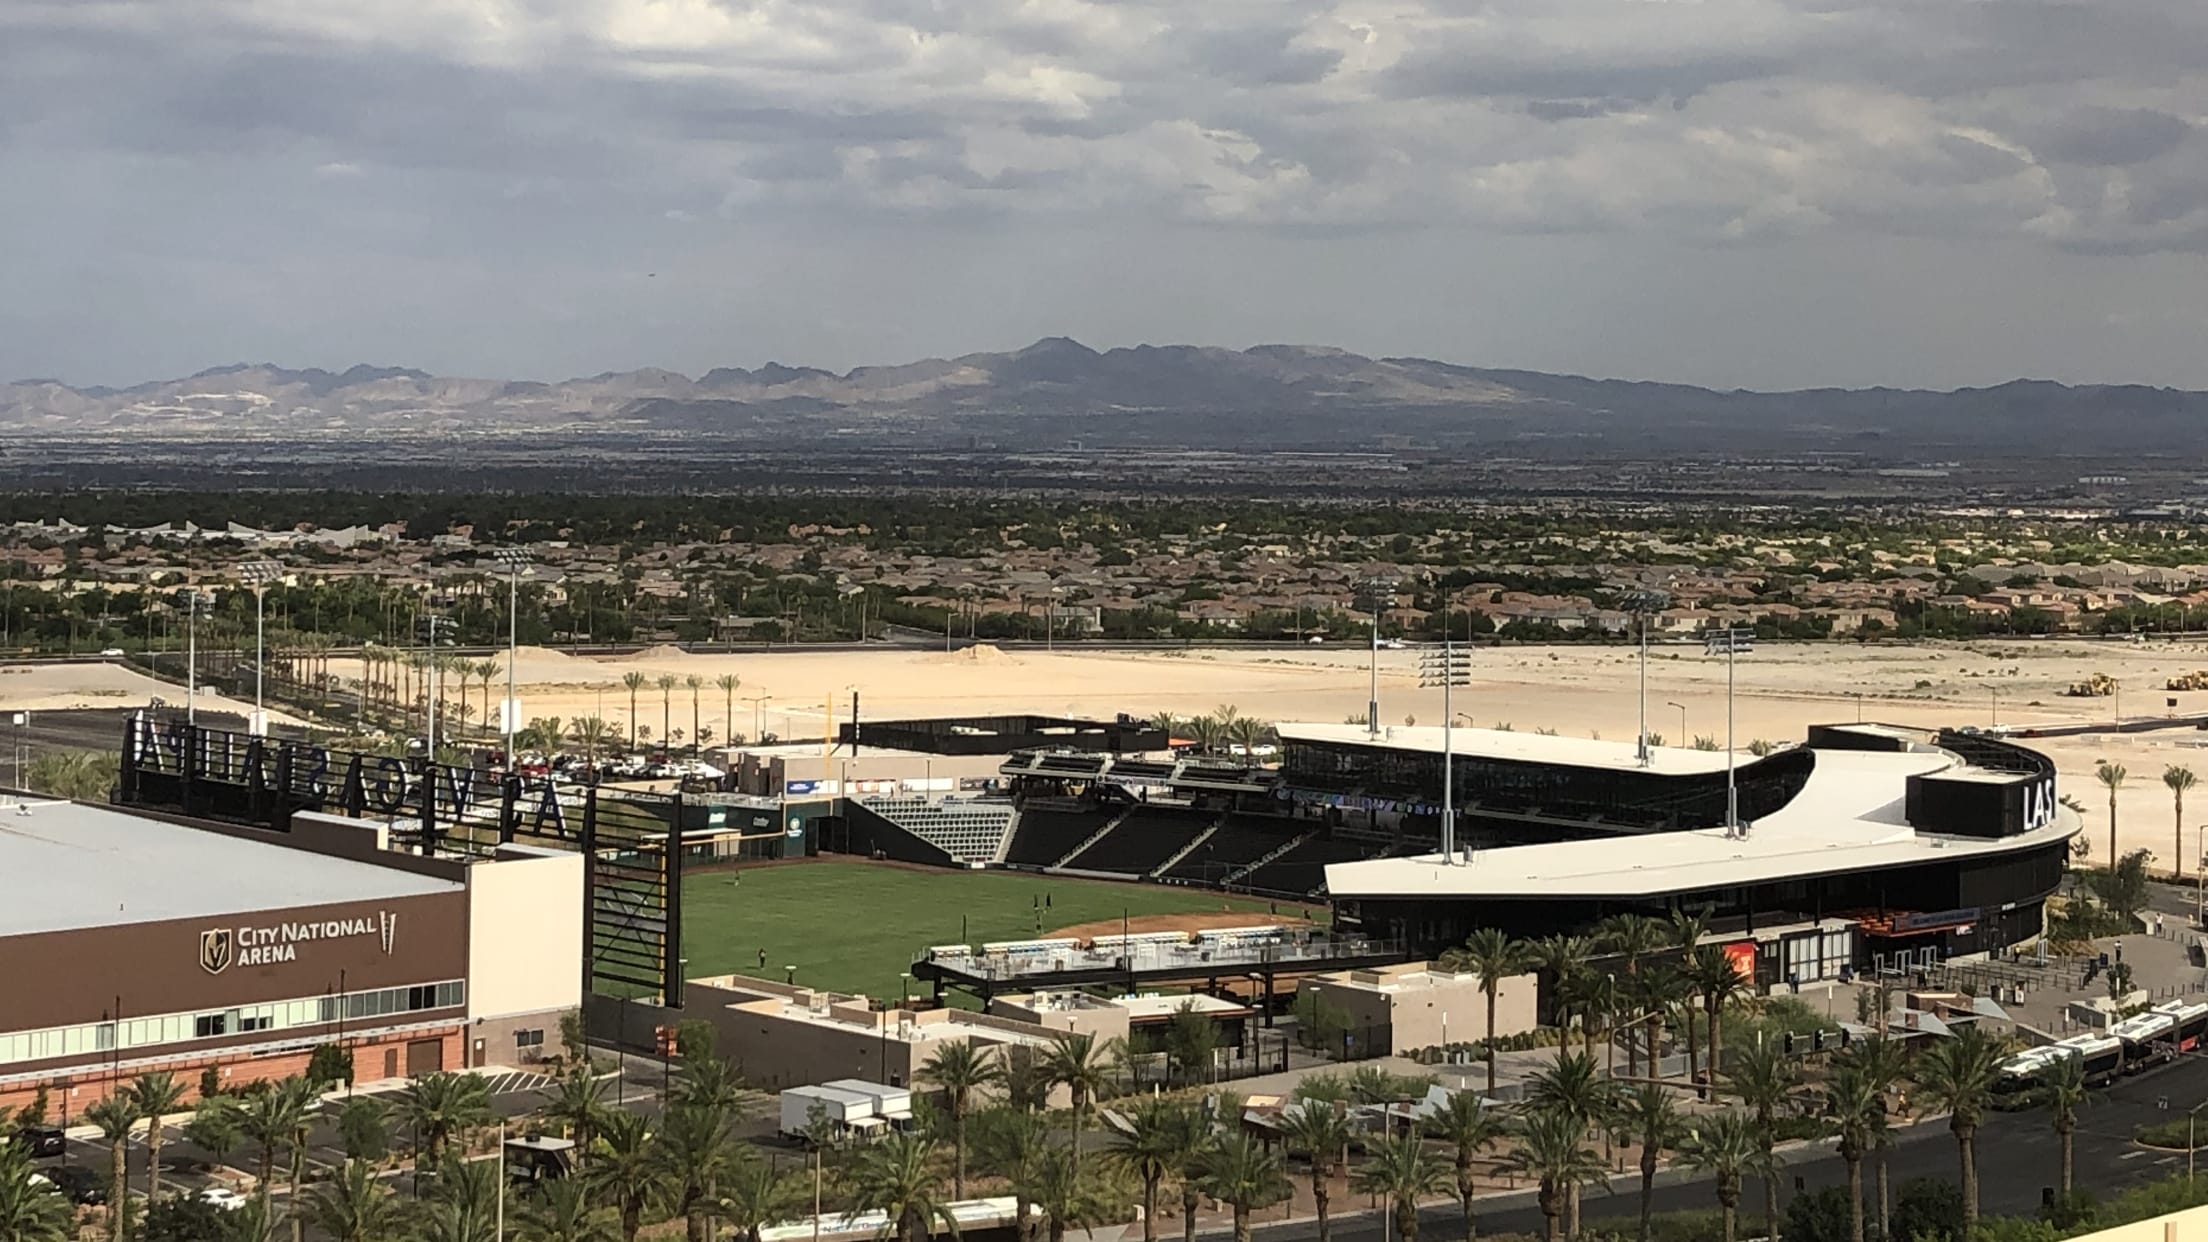 Las Vegas Aviators stadium named Ballpark of Year by website